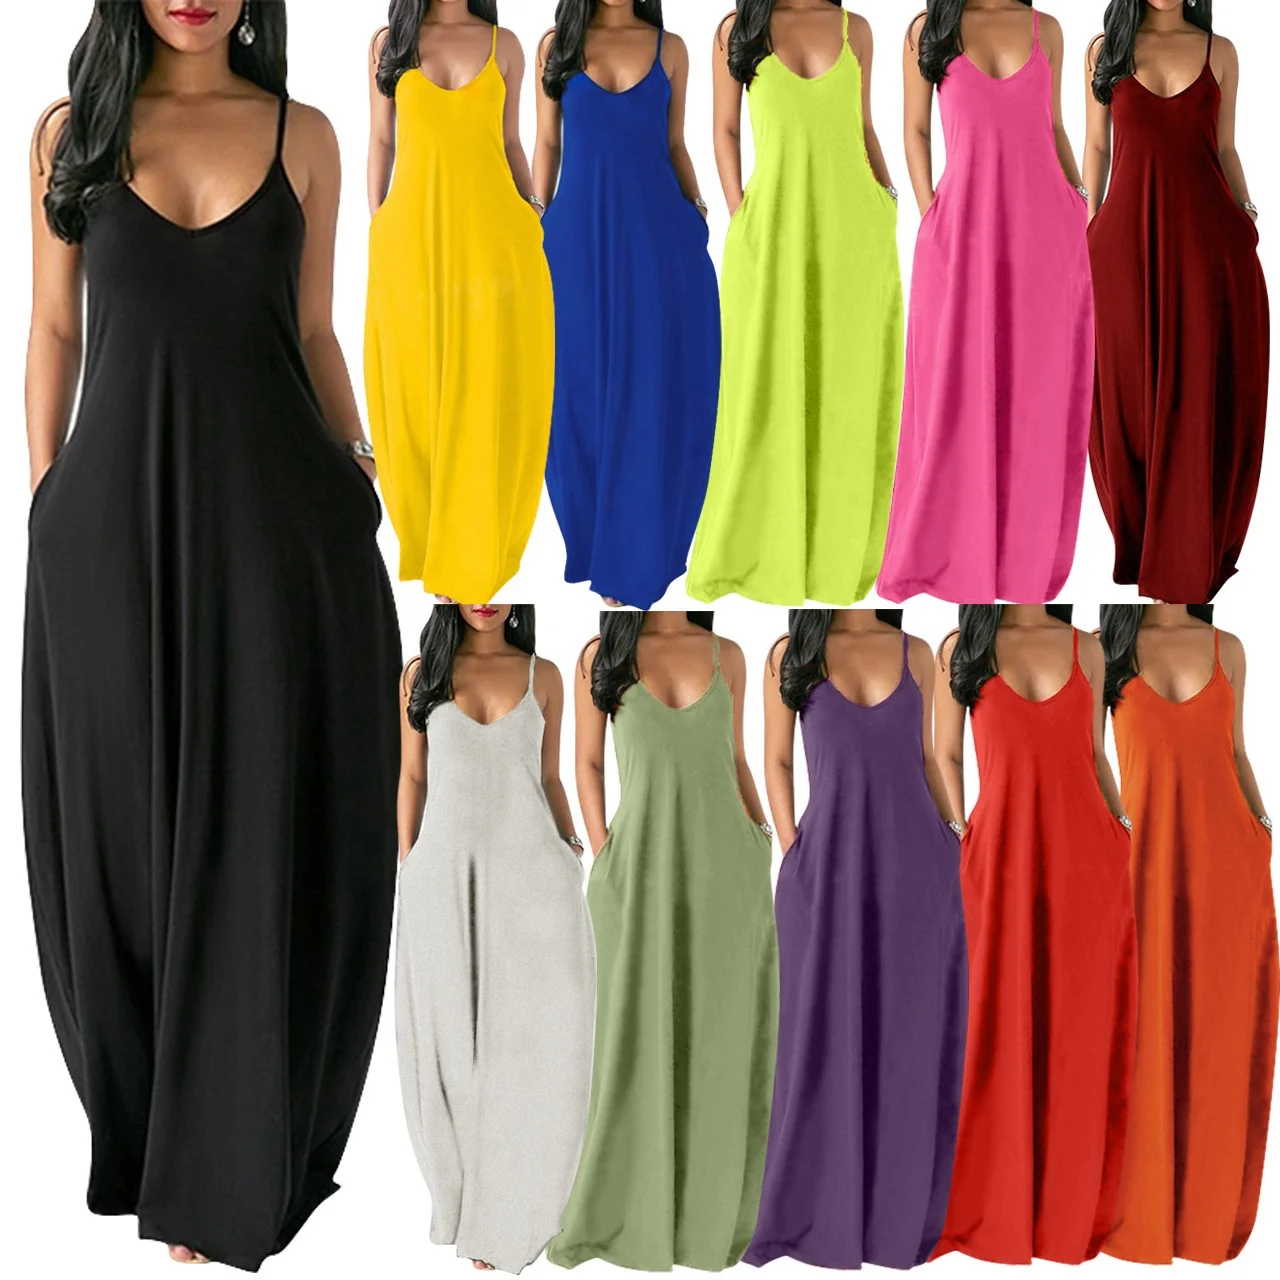 

New Latest Design V-Neck Sleeveless Suspender Long Dress Solid Color Loose Pocket Casual Fashion Women Maxi Dresses